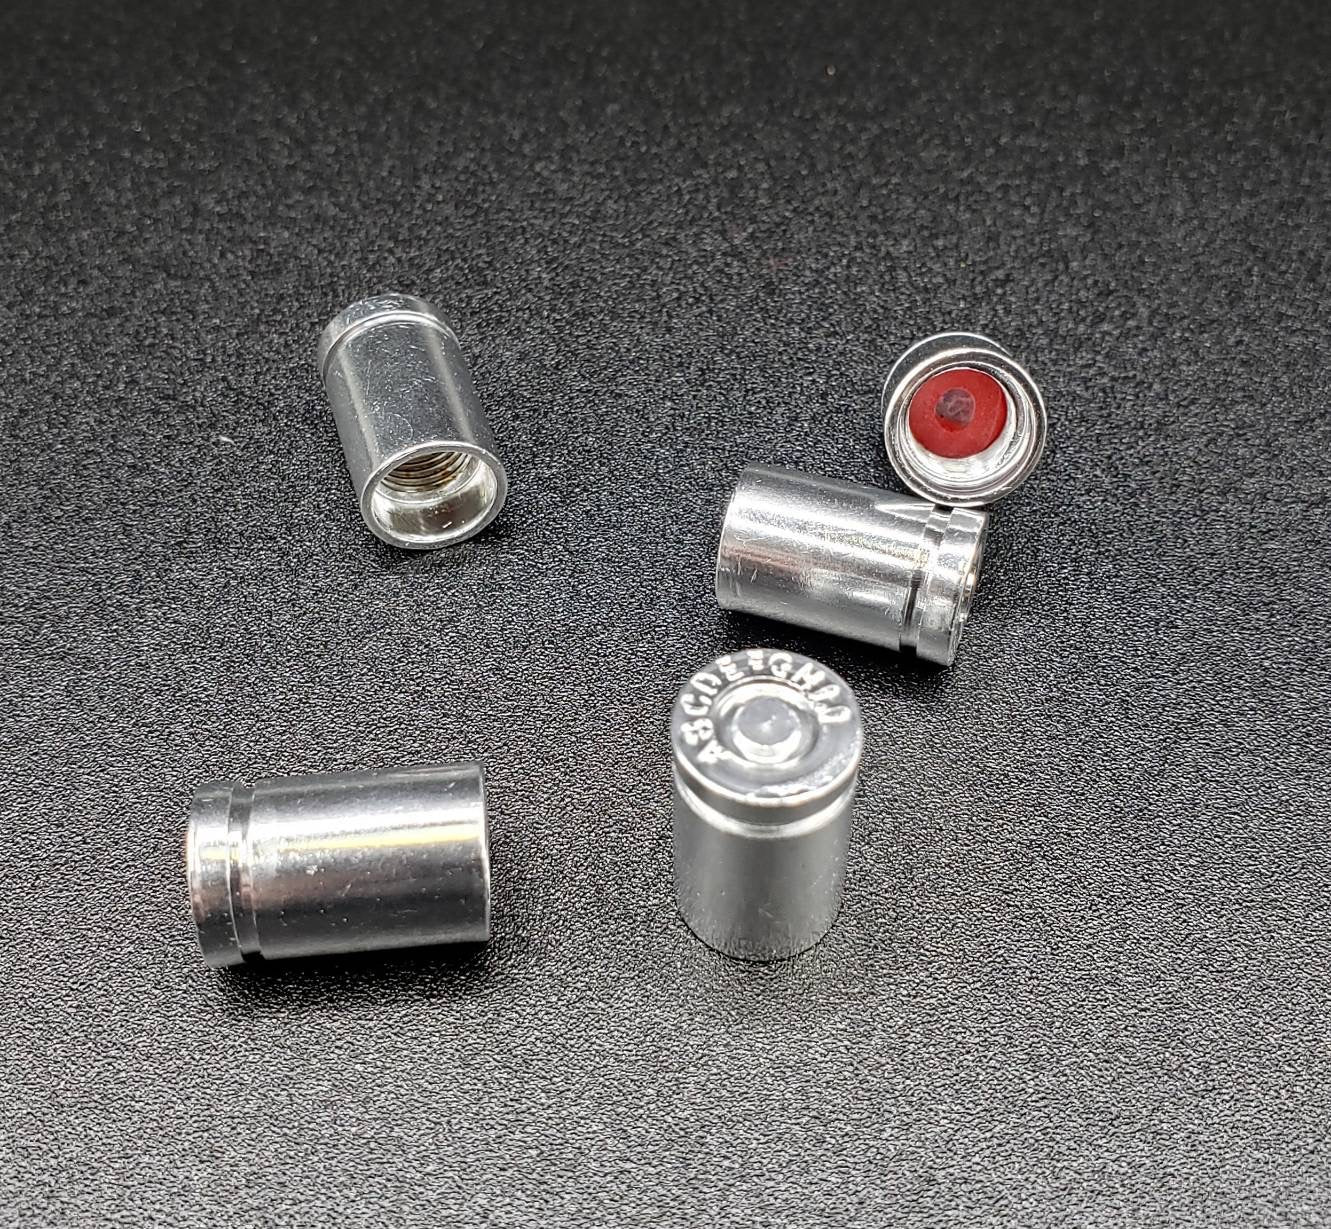 Metal bullet shell casing wheel tire valve stem cap set of 5 choose your color